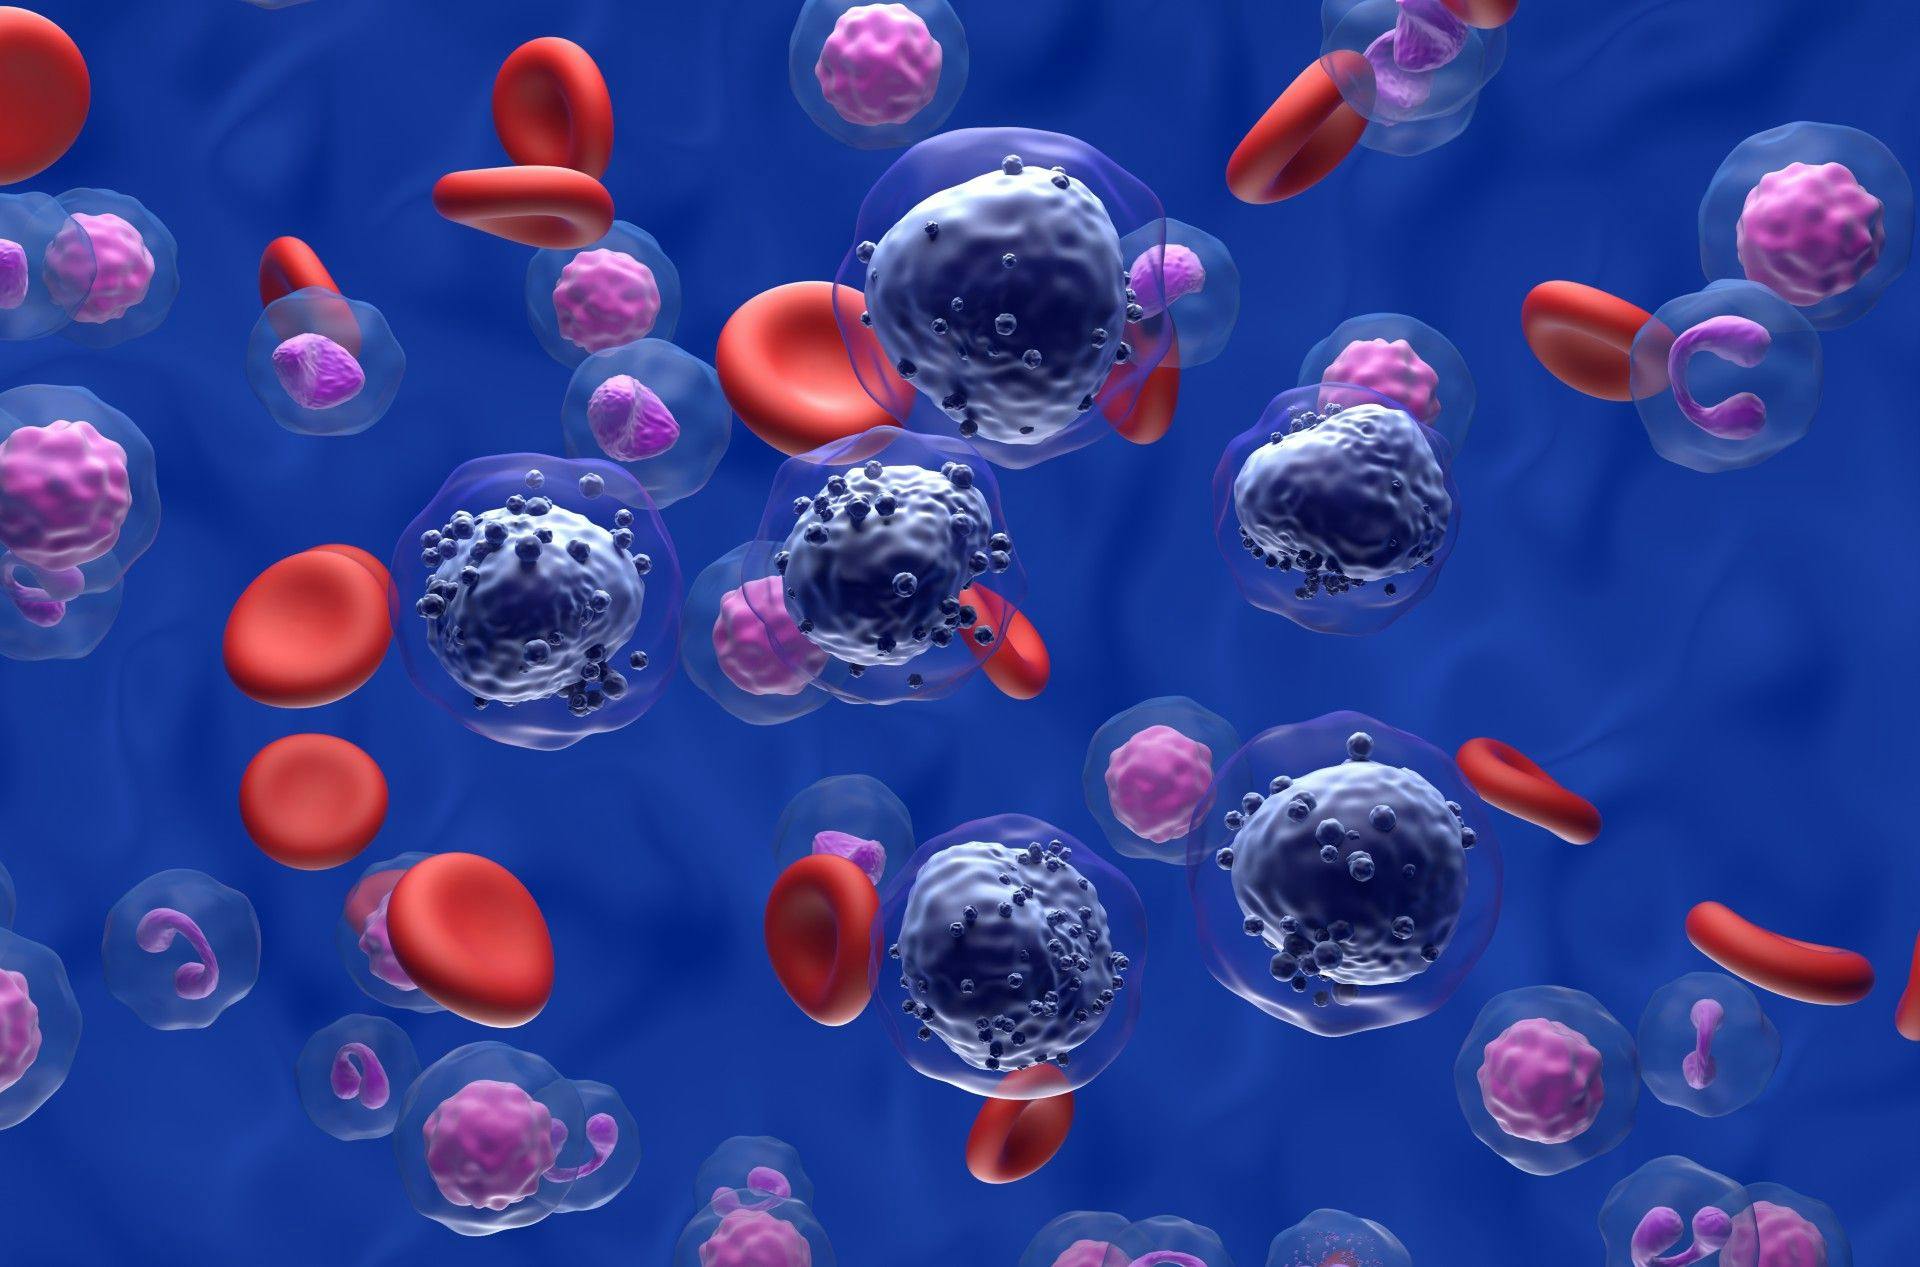 Acute lymphoblastic leukemia cancer cells in blood flow | Image credit: LASZLO - stock.adobe.com